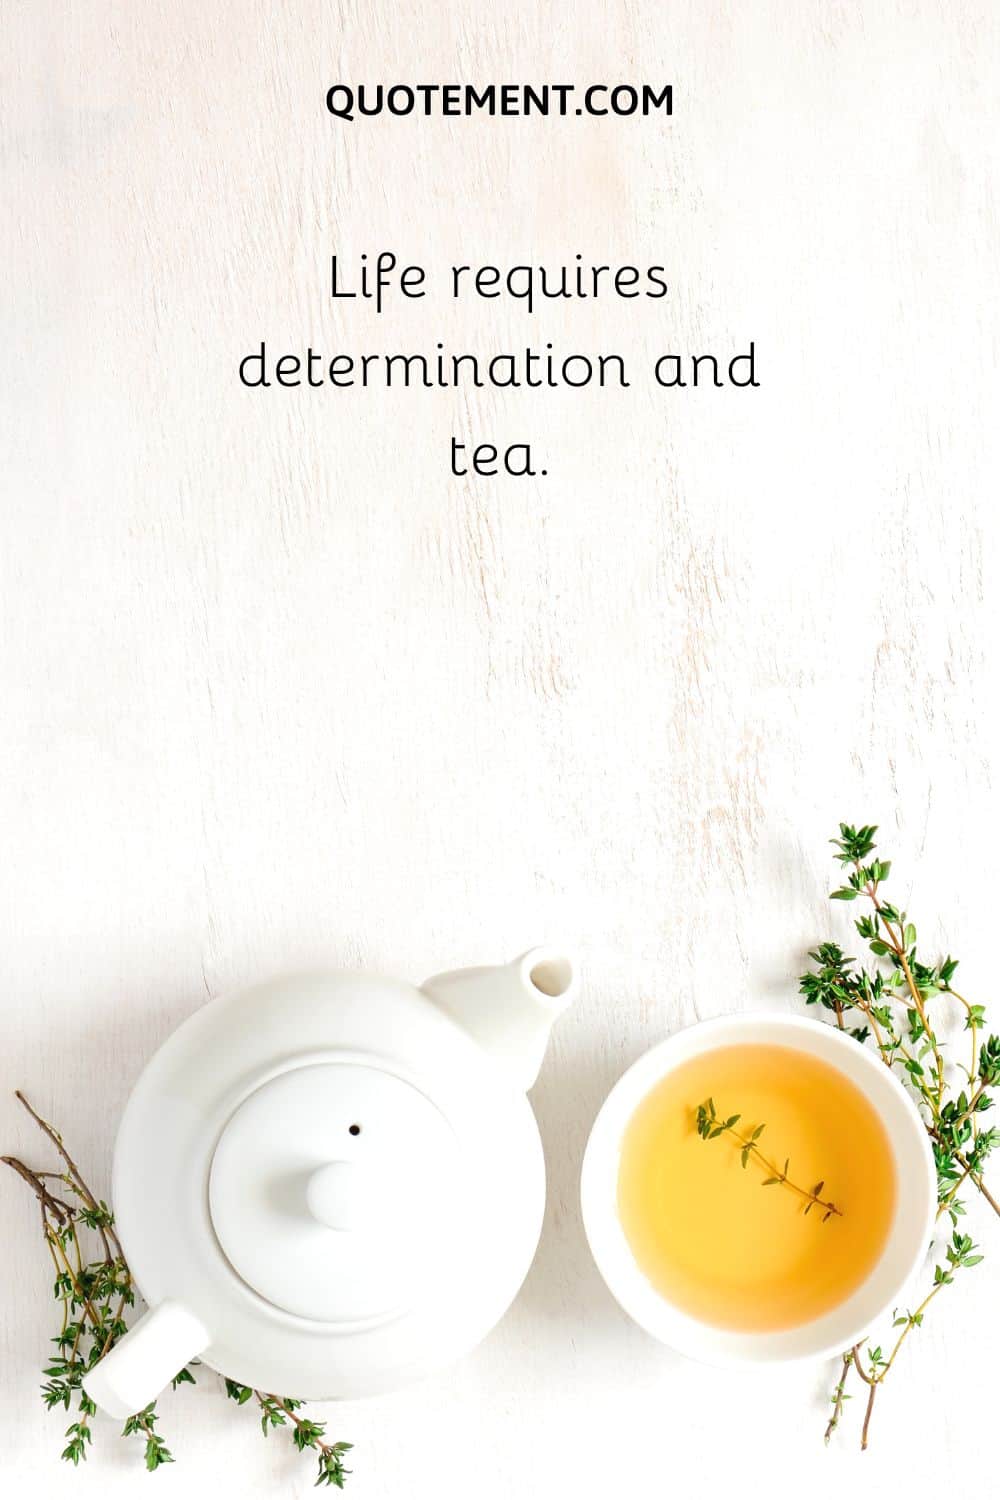 Life requires determination and tea.